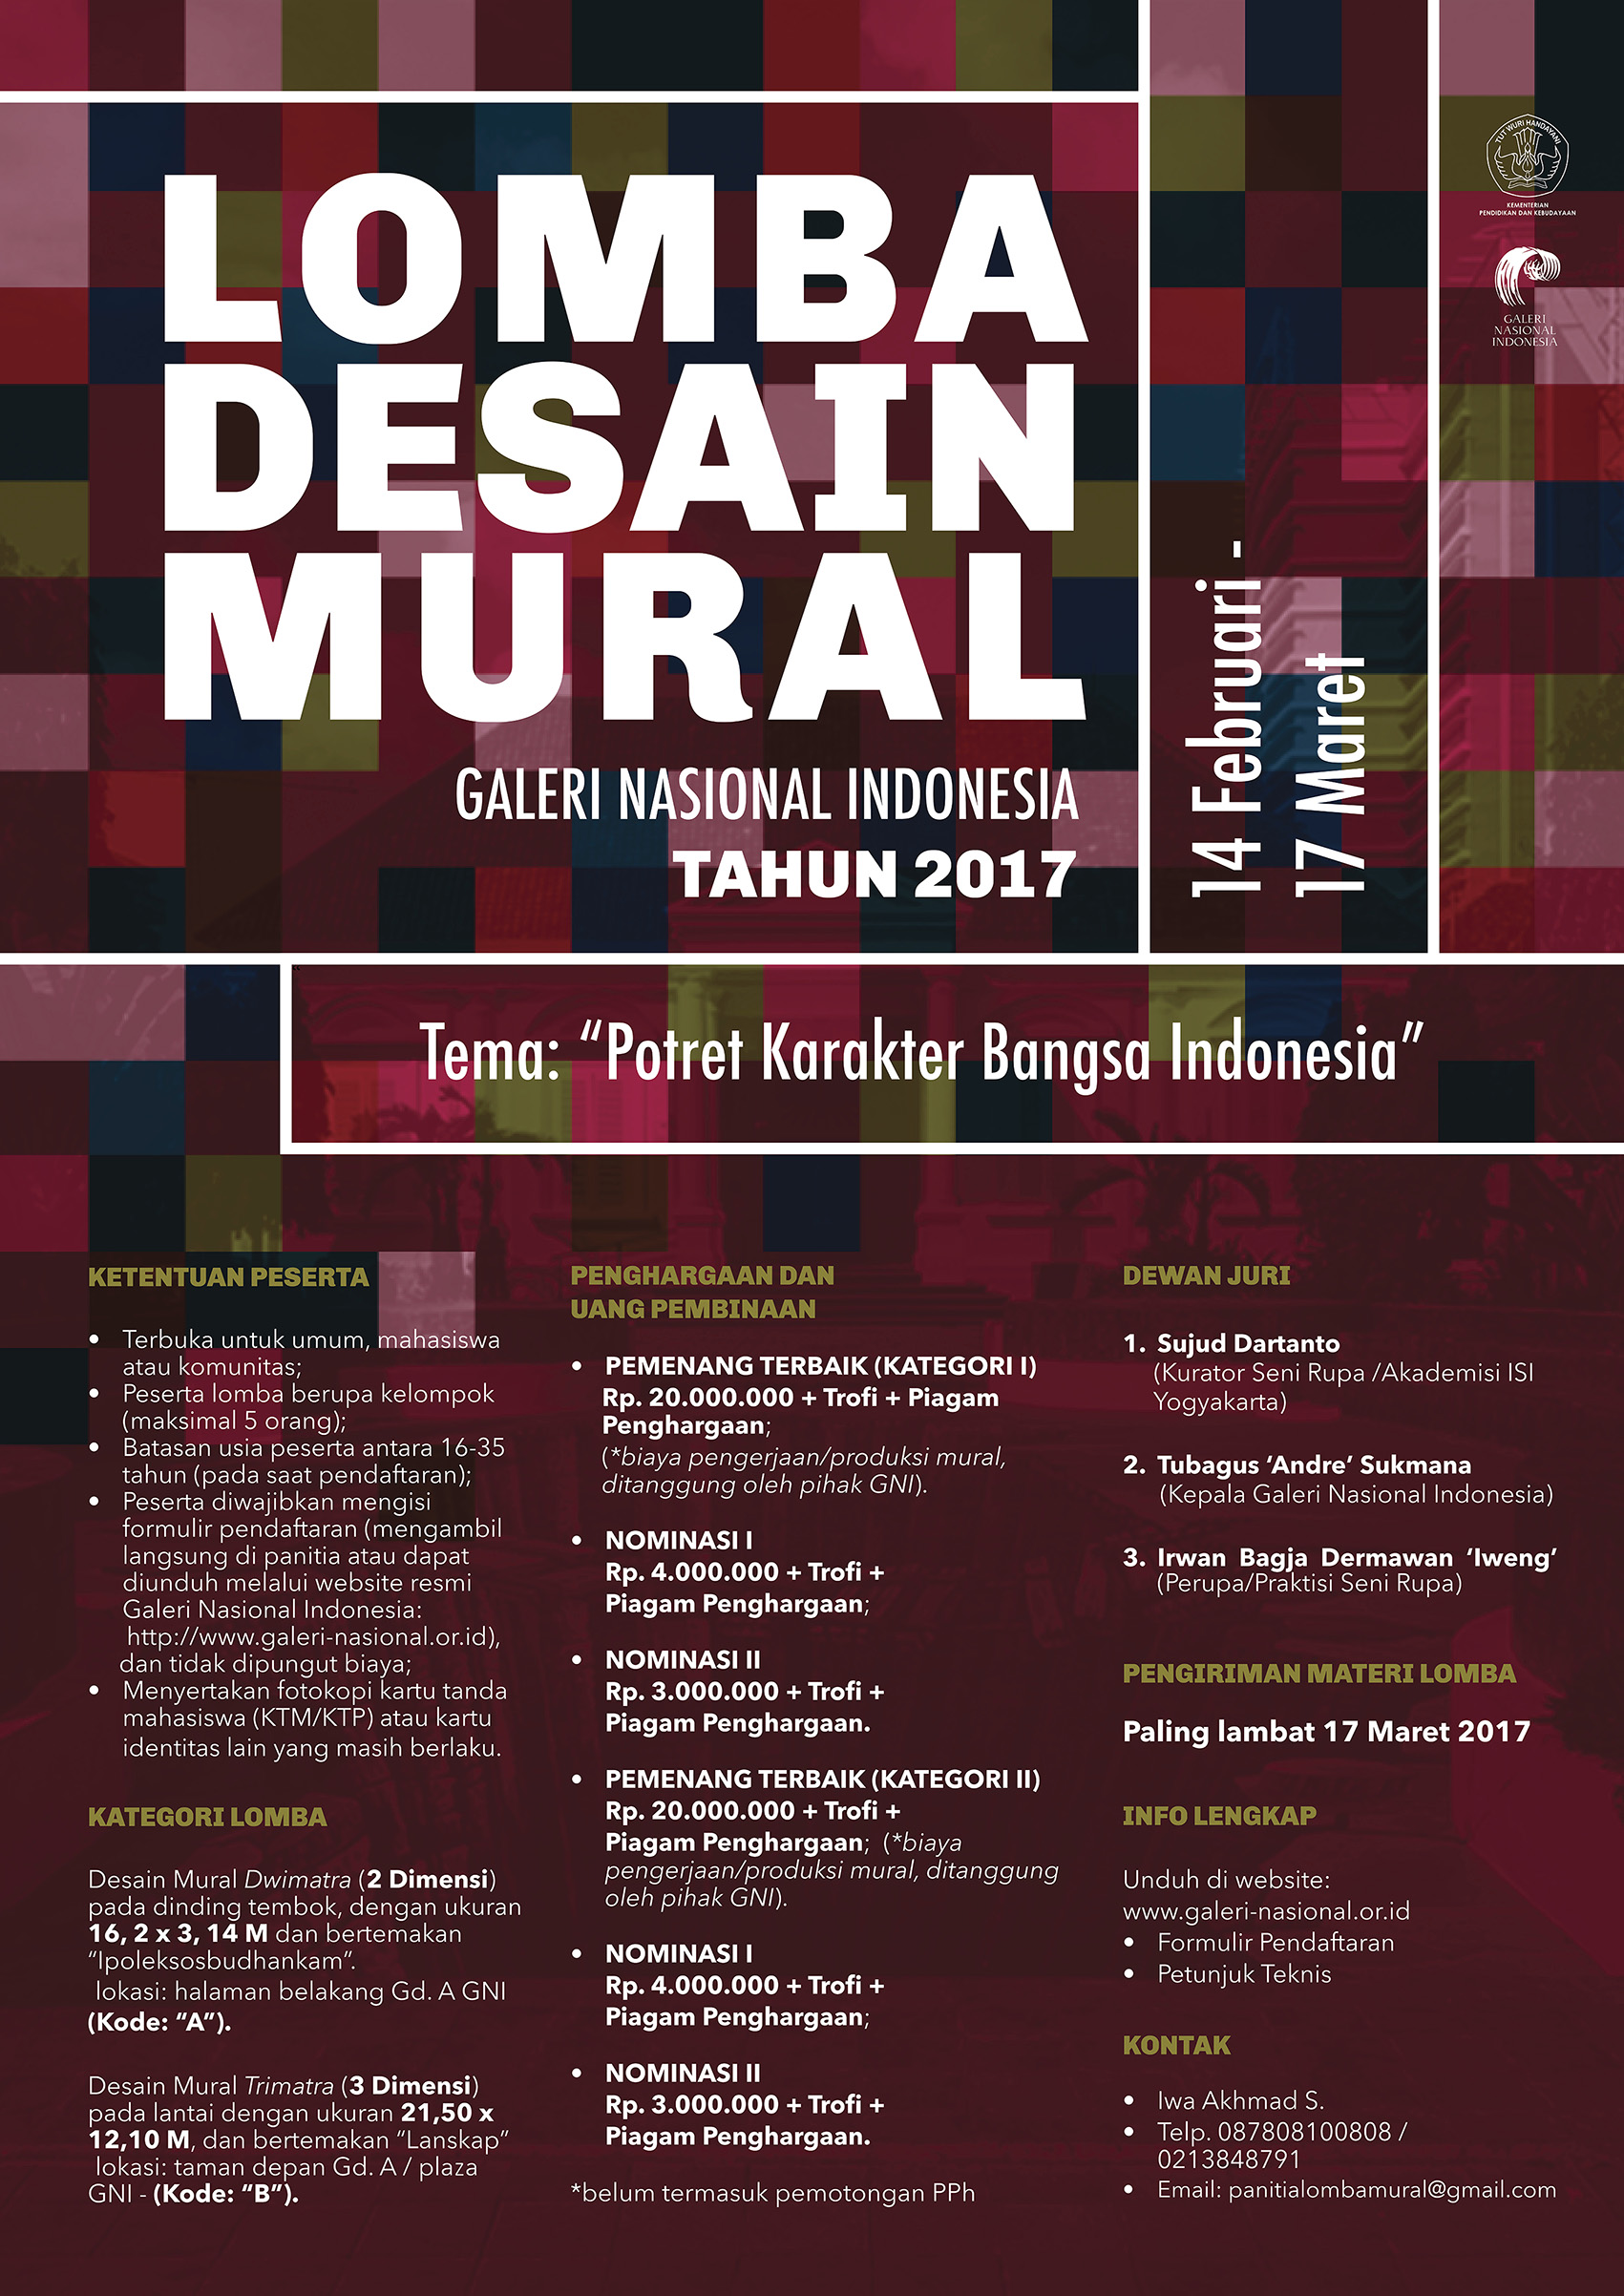 Lomba Desain Mural 2017 Tema “Potret Karakter Bangsa Indonesia”